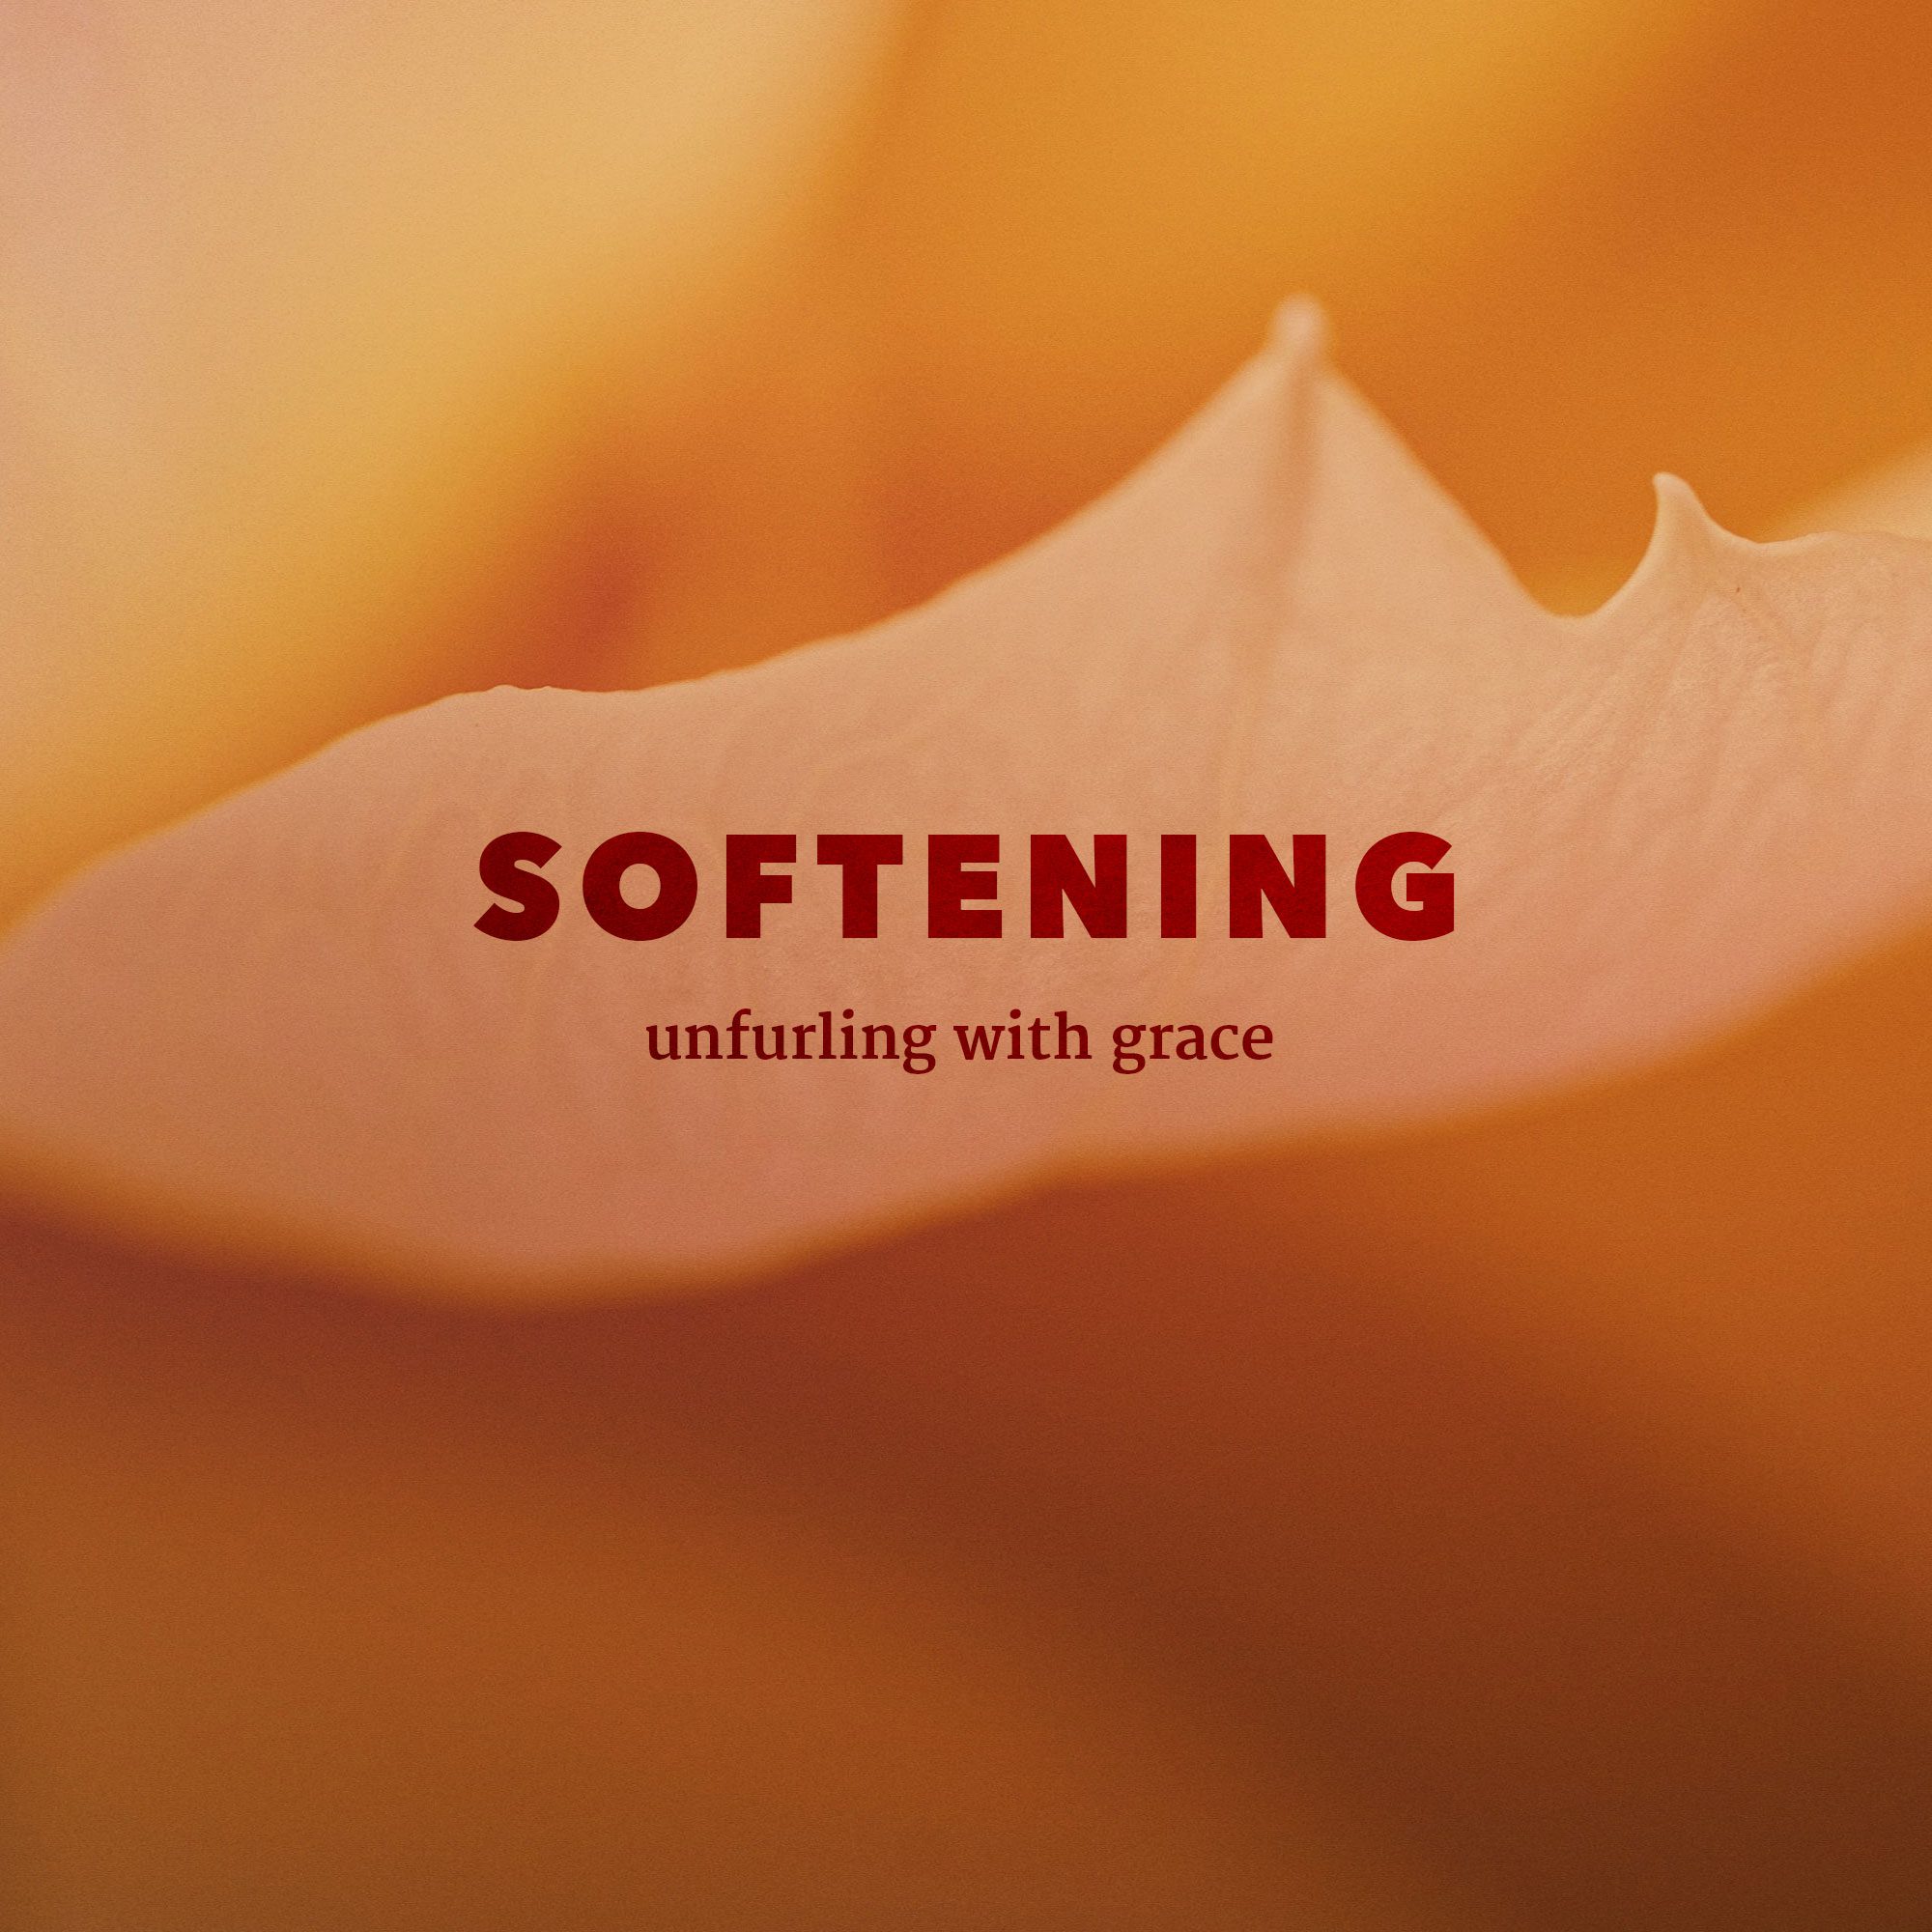 SOFTENING - unfurling with grace